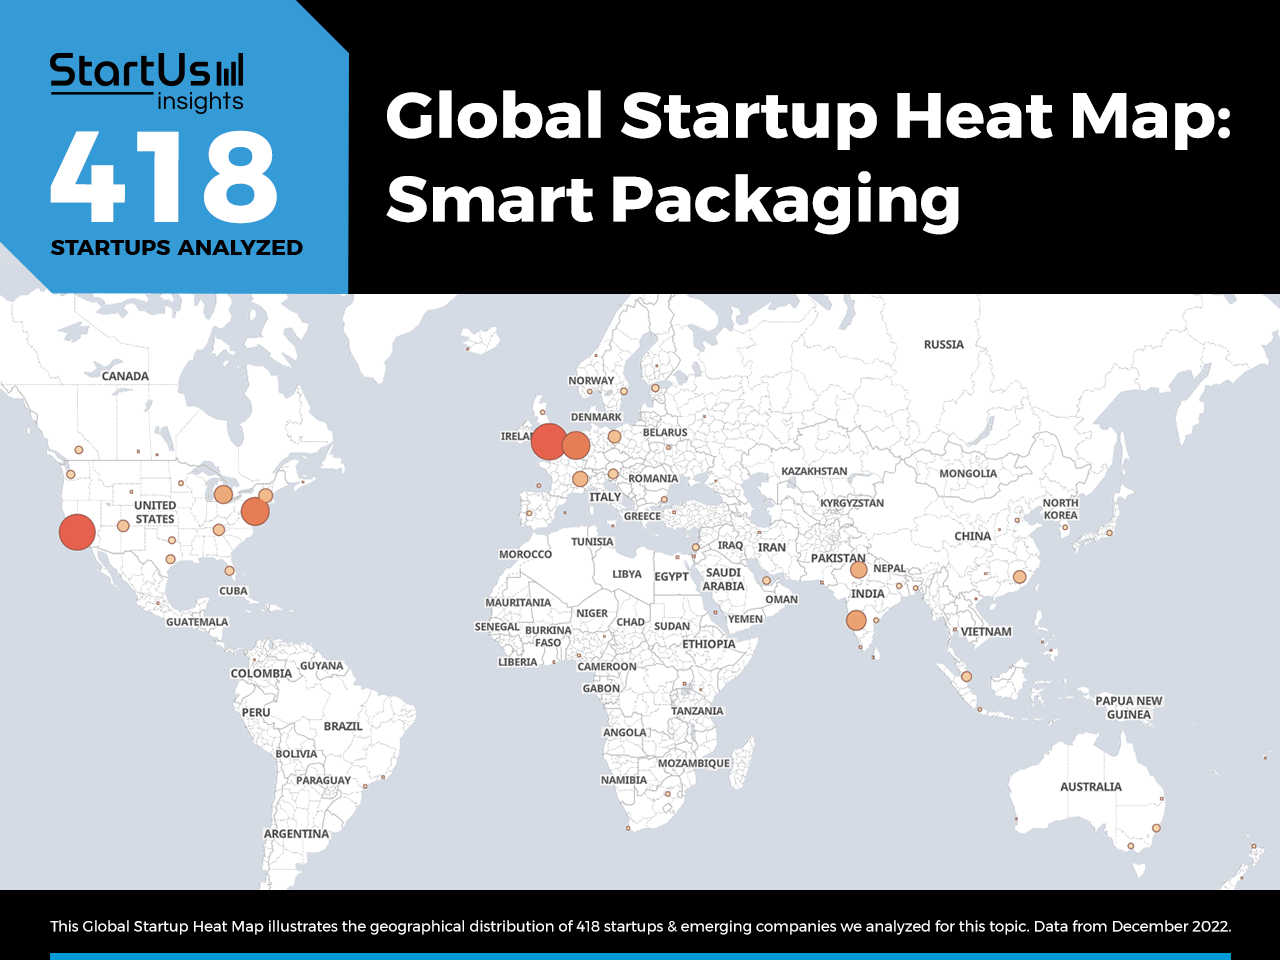 Smart-Packaging-startups-Heat-Map-StartUs-Insights-noresize